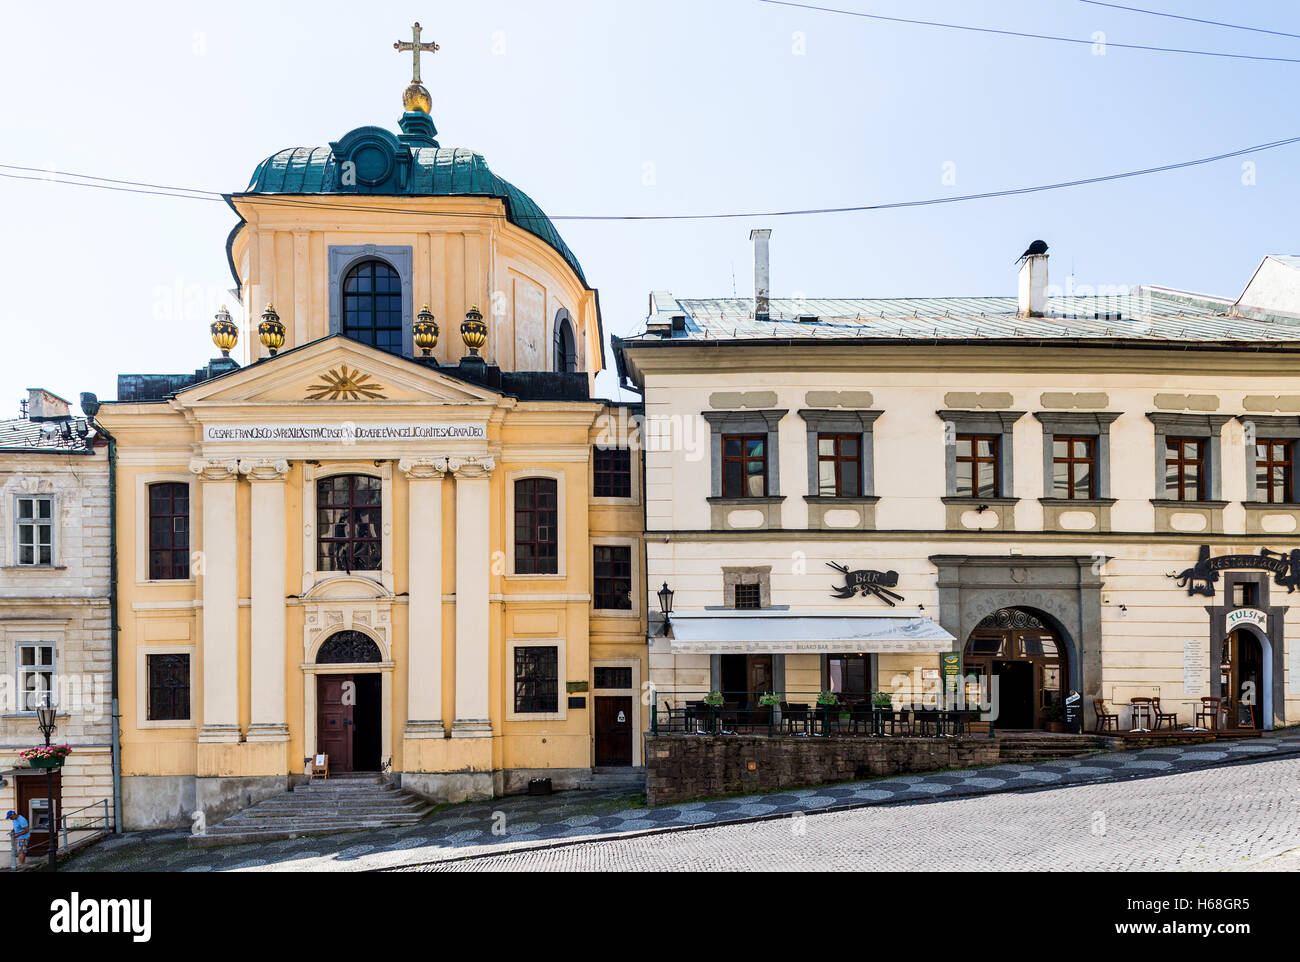 Banska Stiavnica, Slovakia - august 06, 2015: Evangelical church in Banska Stiavnica, Slovakia. Unesco city. Stock Photo